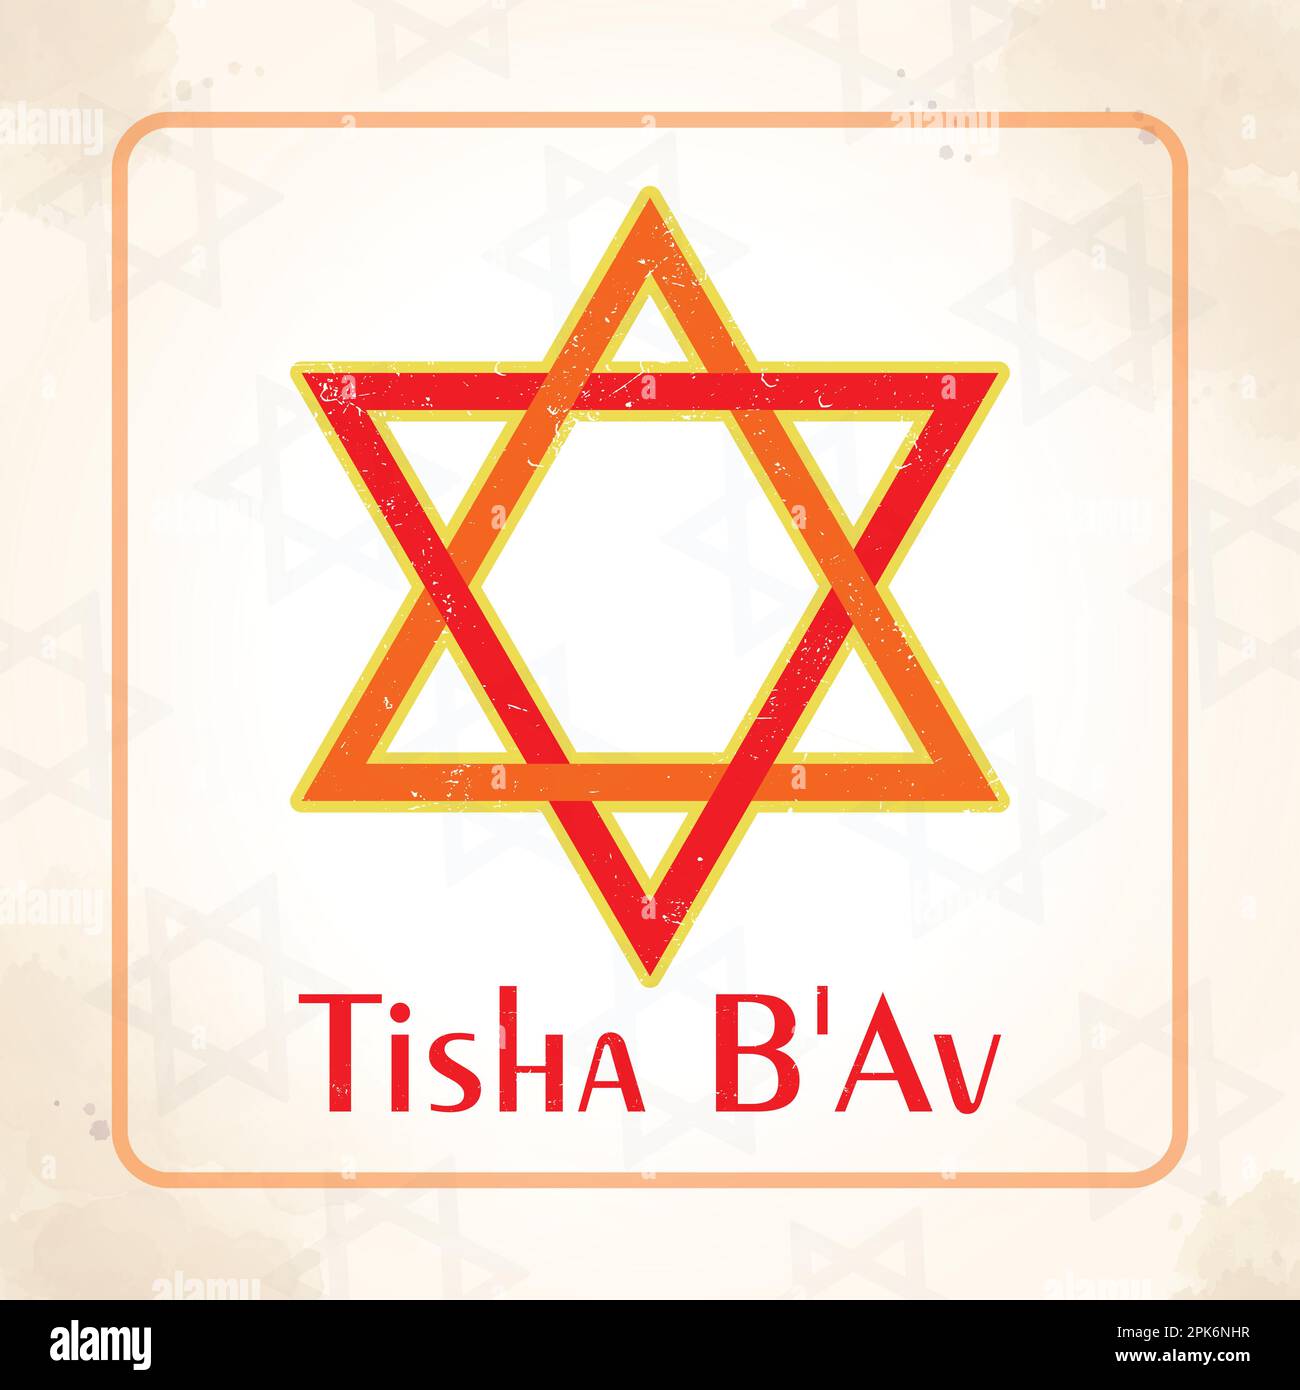 Tisha B'Av Jewish holiday. David star hand drawn yellow symbol on red flame, modern background vector illustration Stock Vector